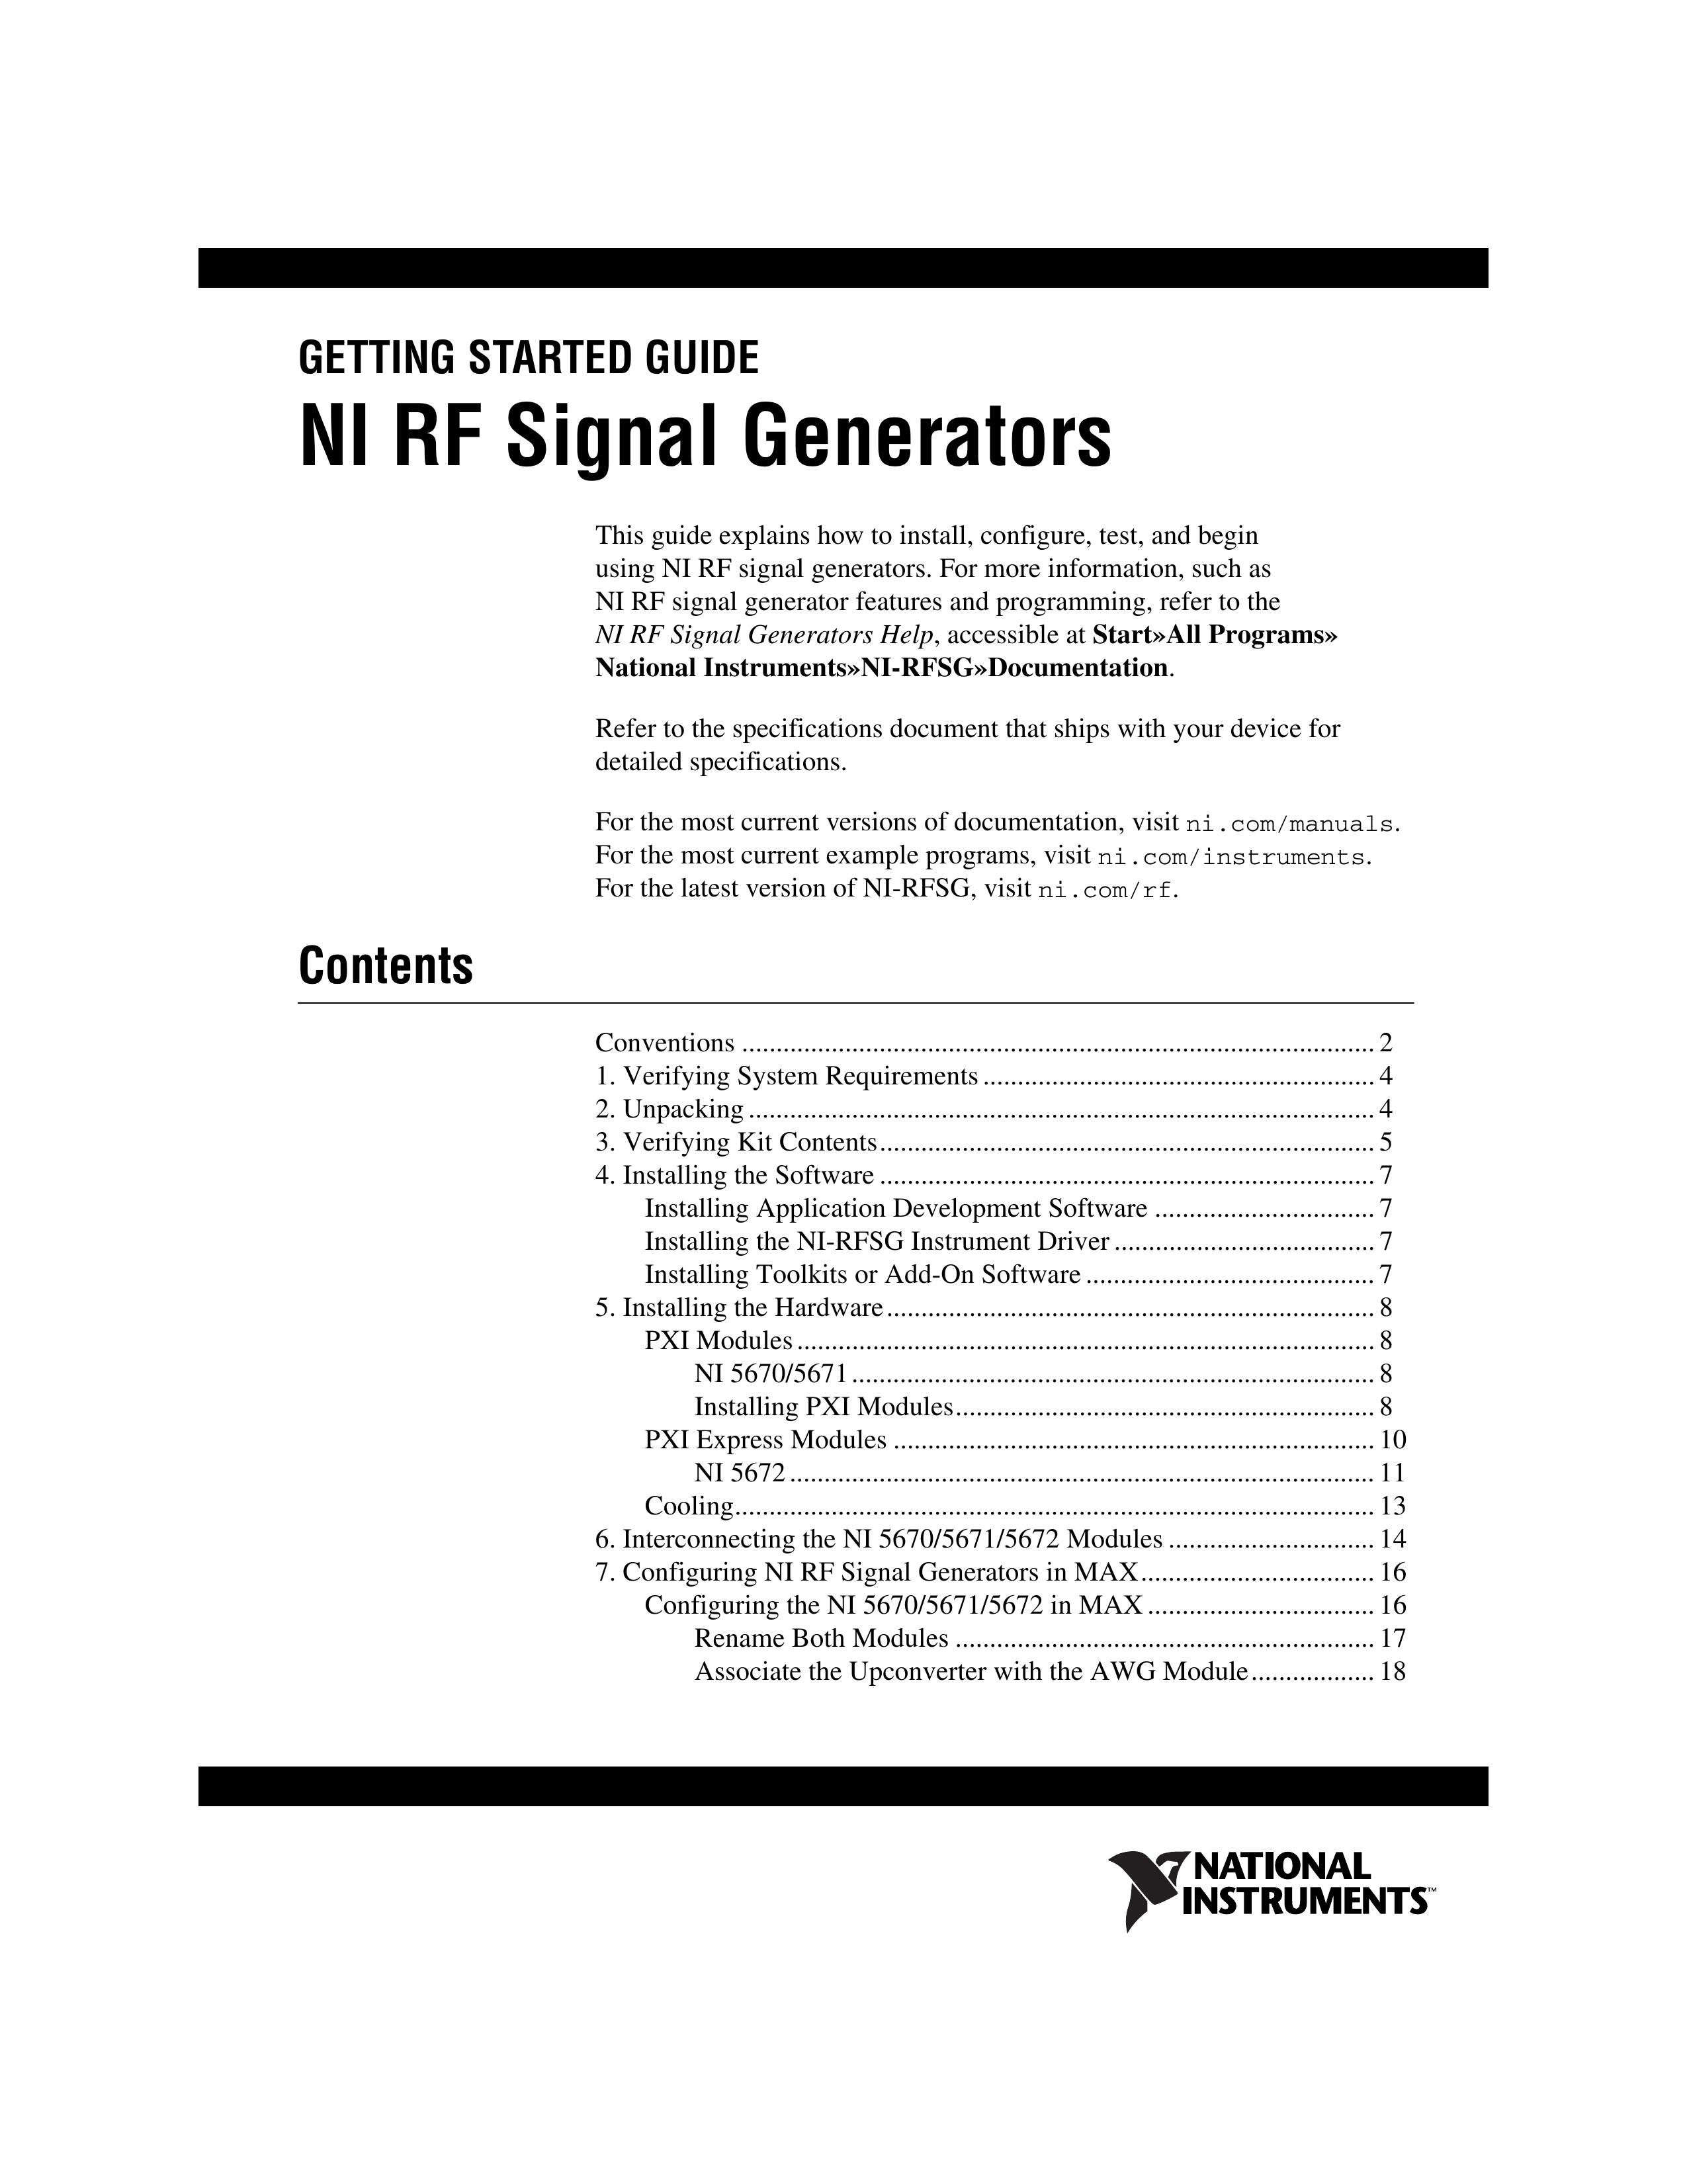 National Instruments NI 5672 Portable Generator User Manual